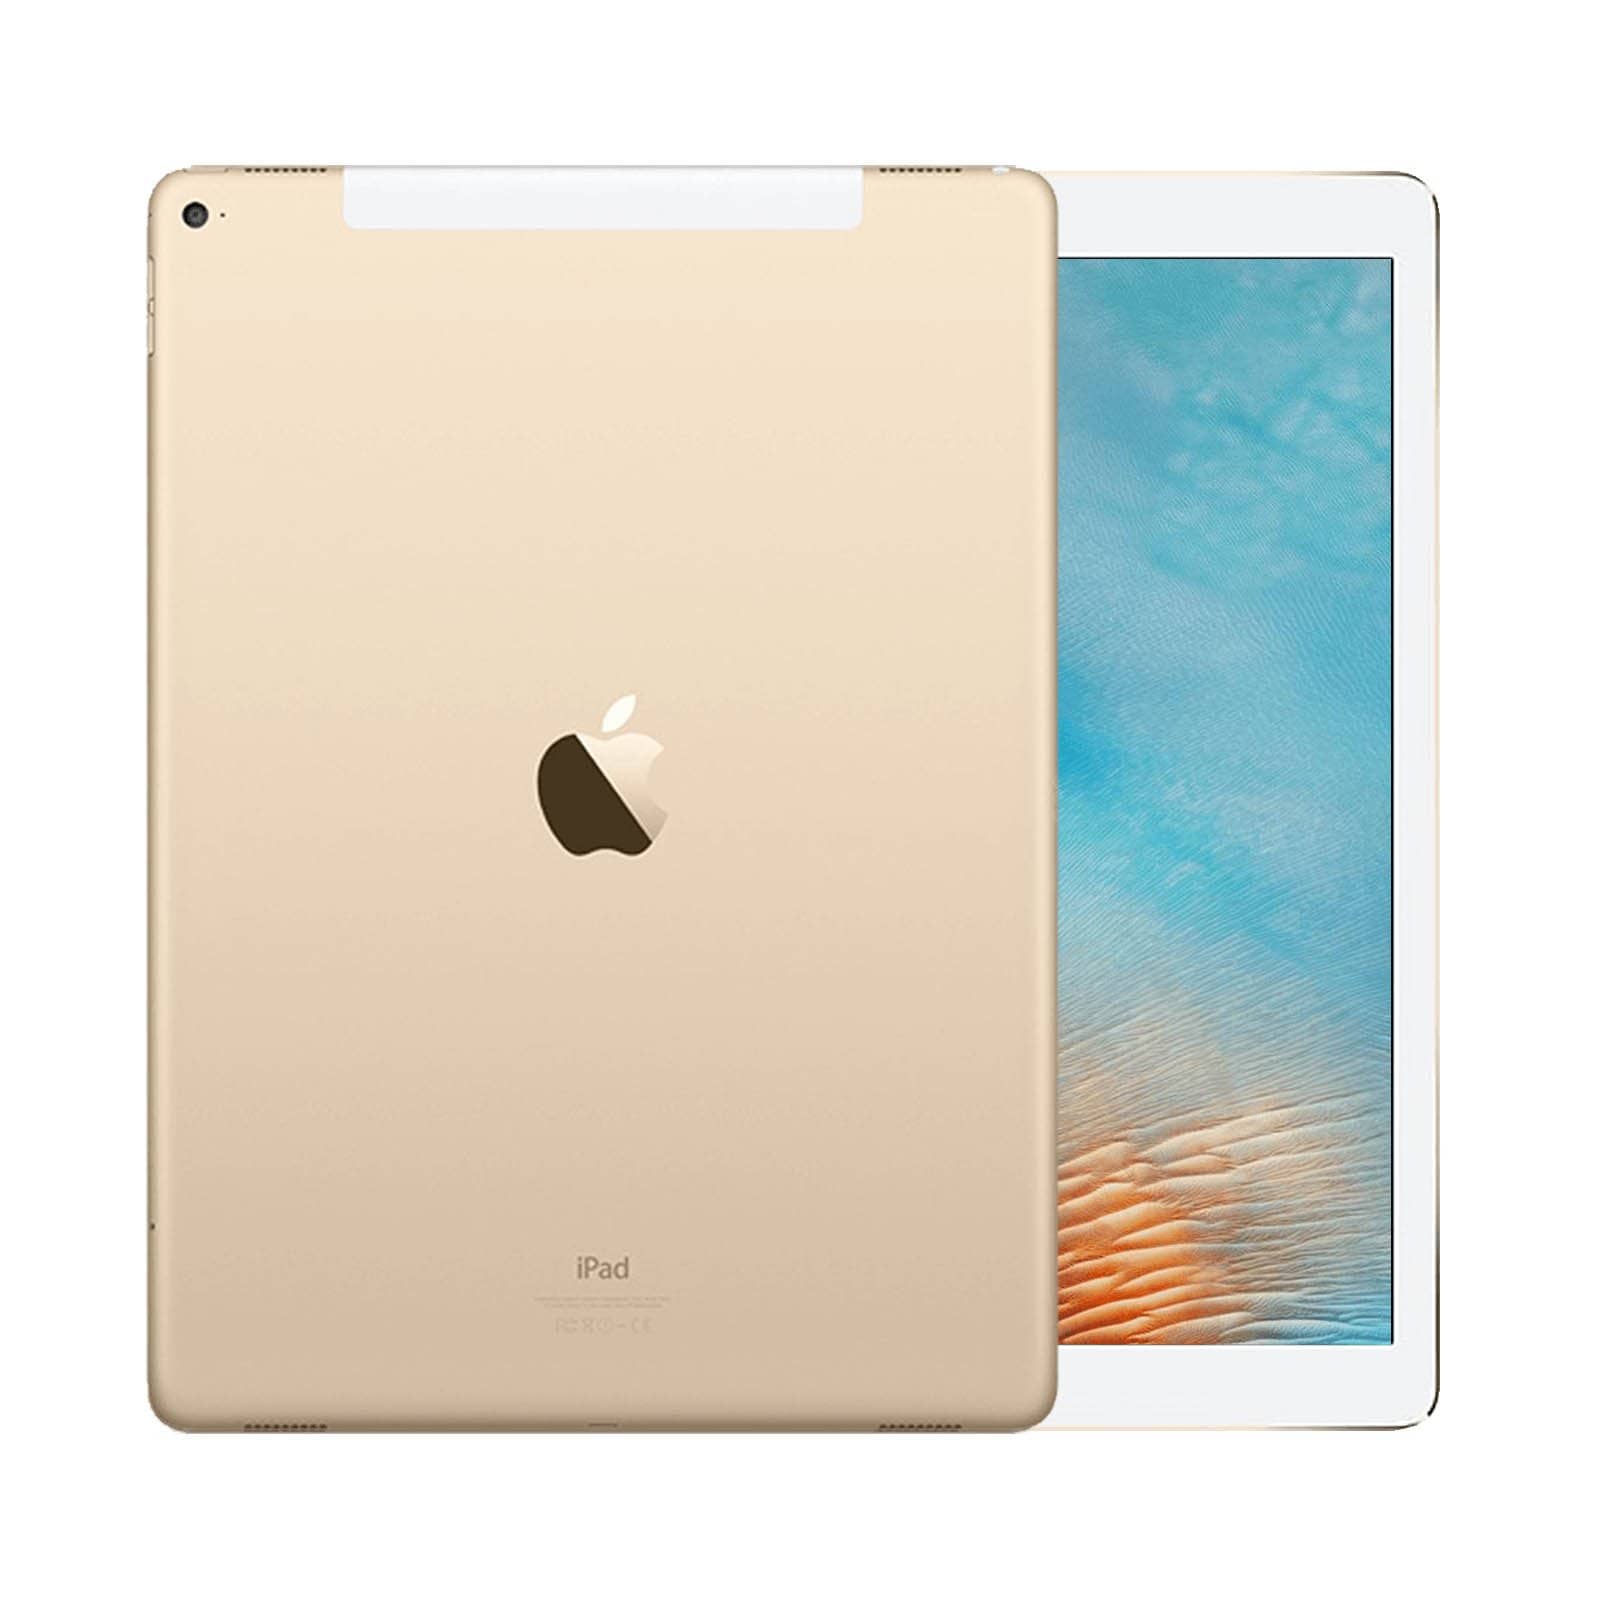 iPad Pro 12.9 Inch 2nd Gen 64GB Gold Very Good - Unlocked 64GB Gold Very Good